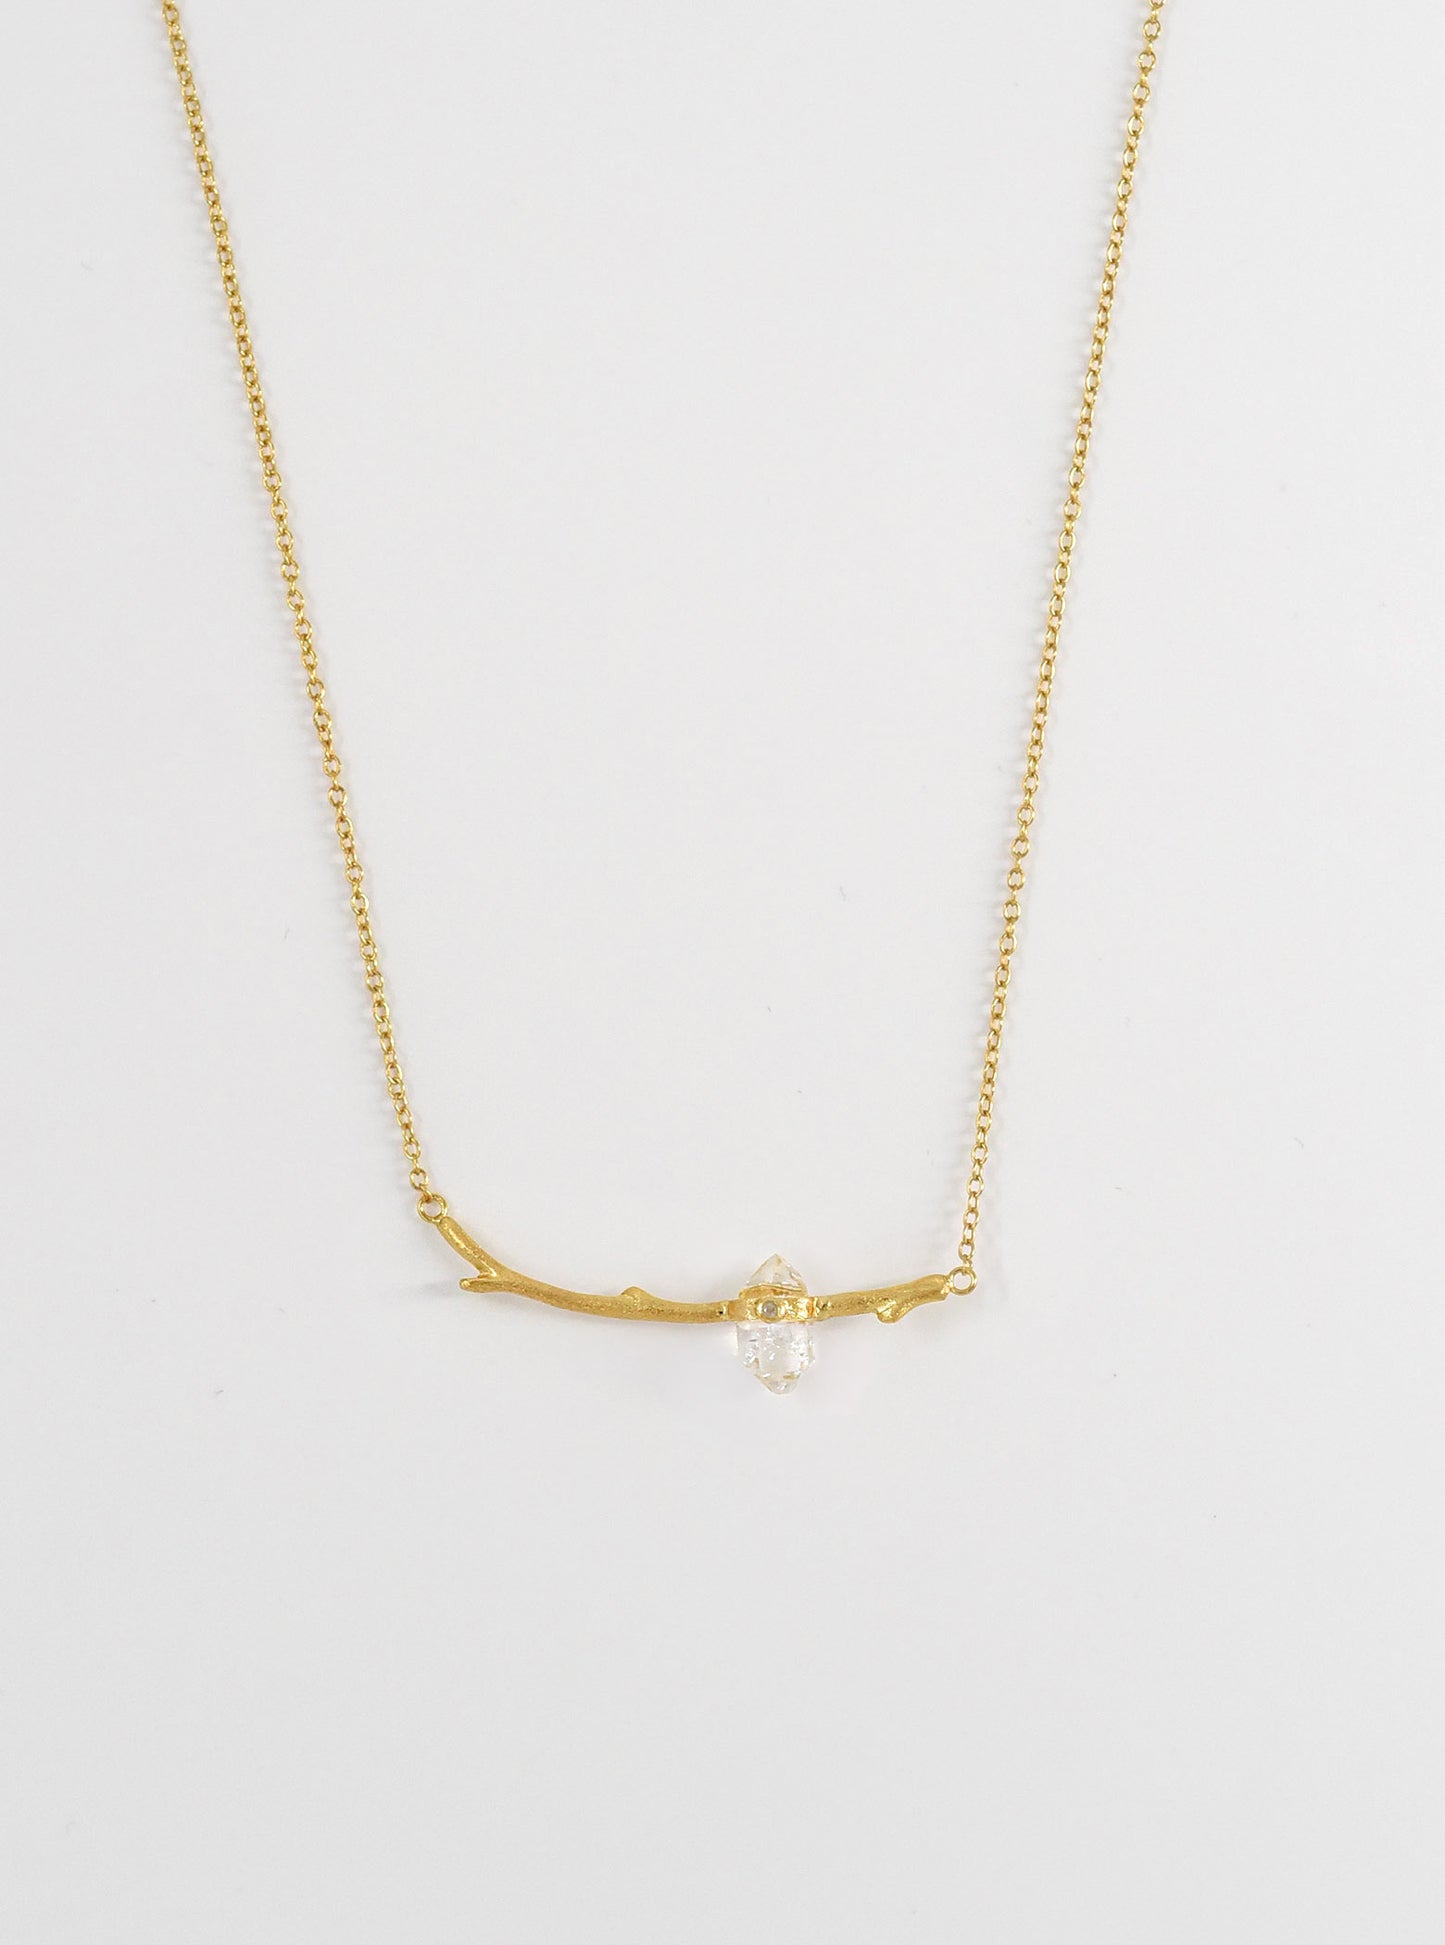 Branch Herkimer Diamond Necklace